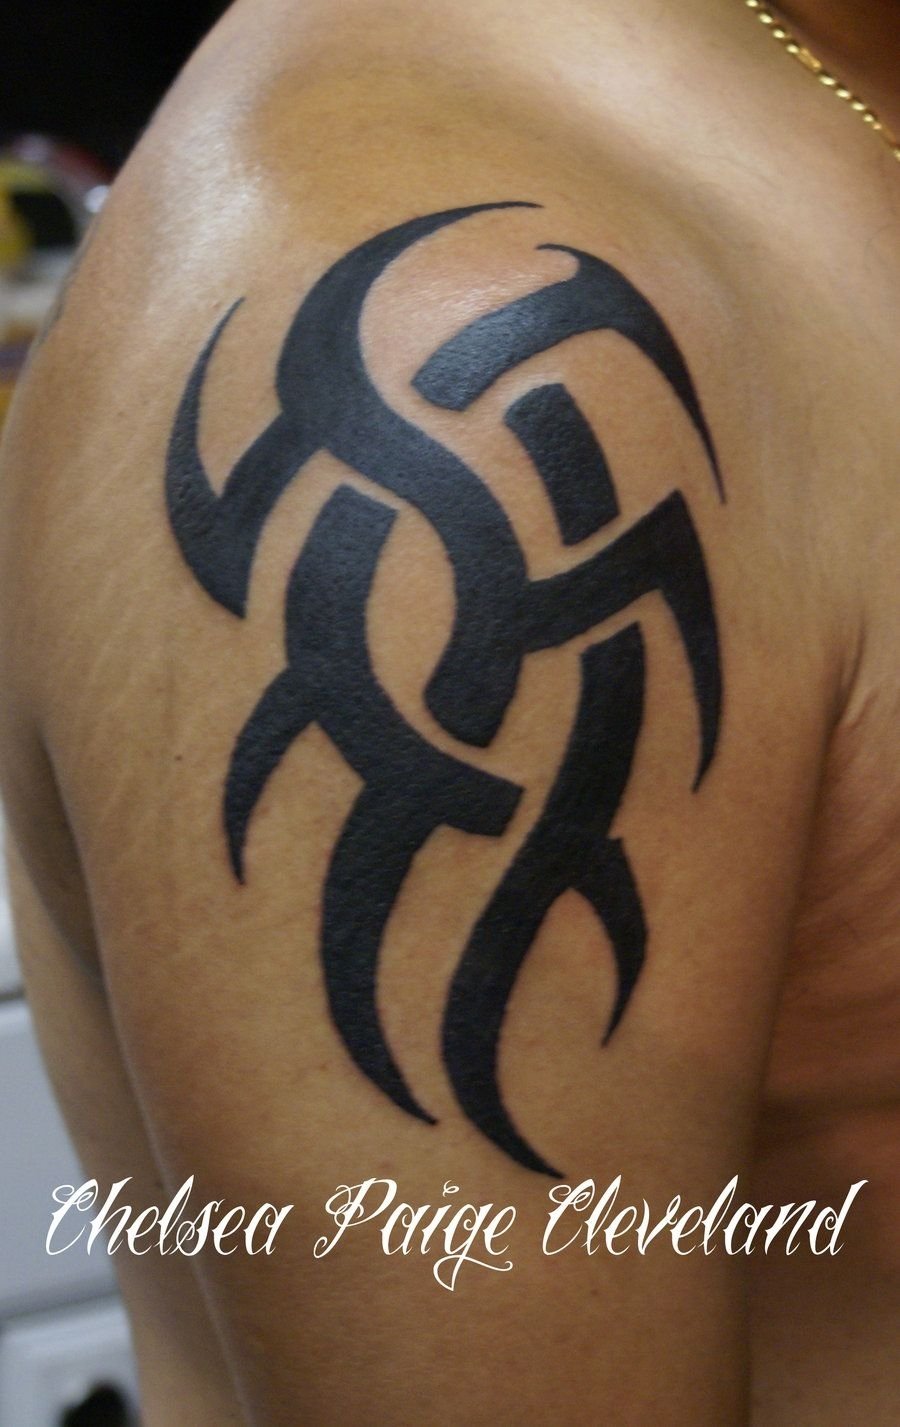 10 Unique Arm Tattoos Ideas For Guys tribal sleeve tattoos google search tattoos pinterest tribal 2022